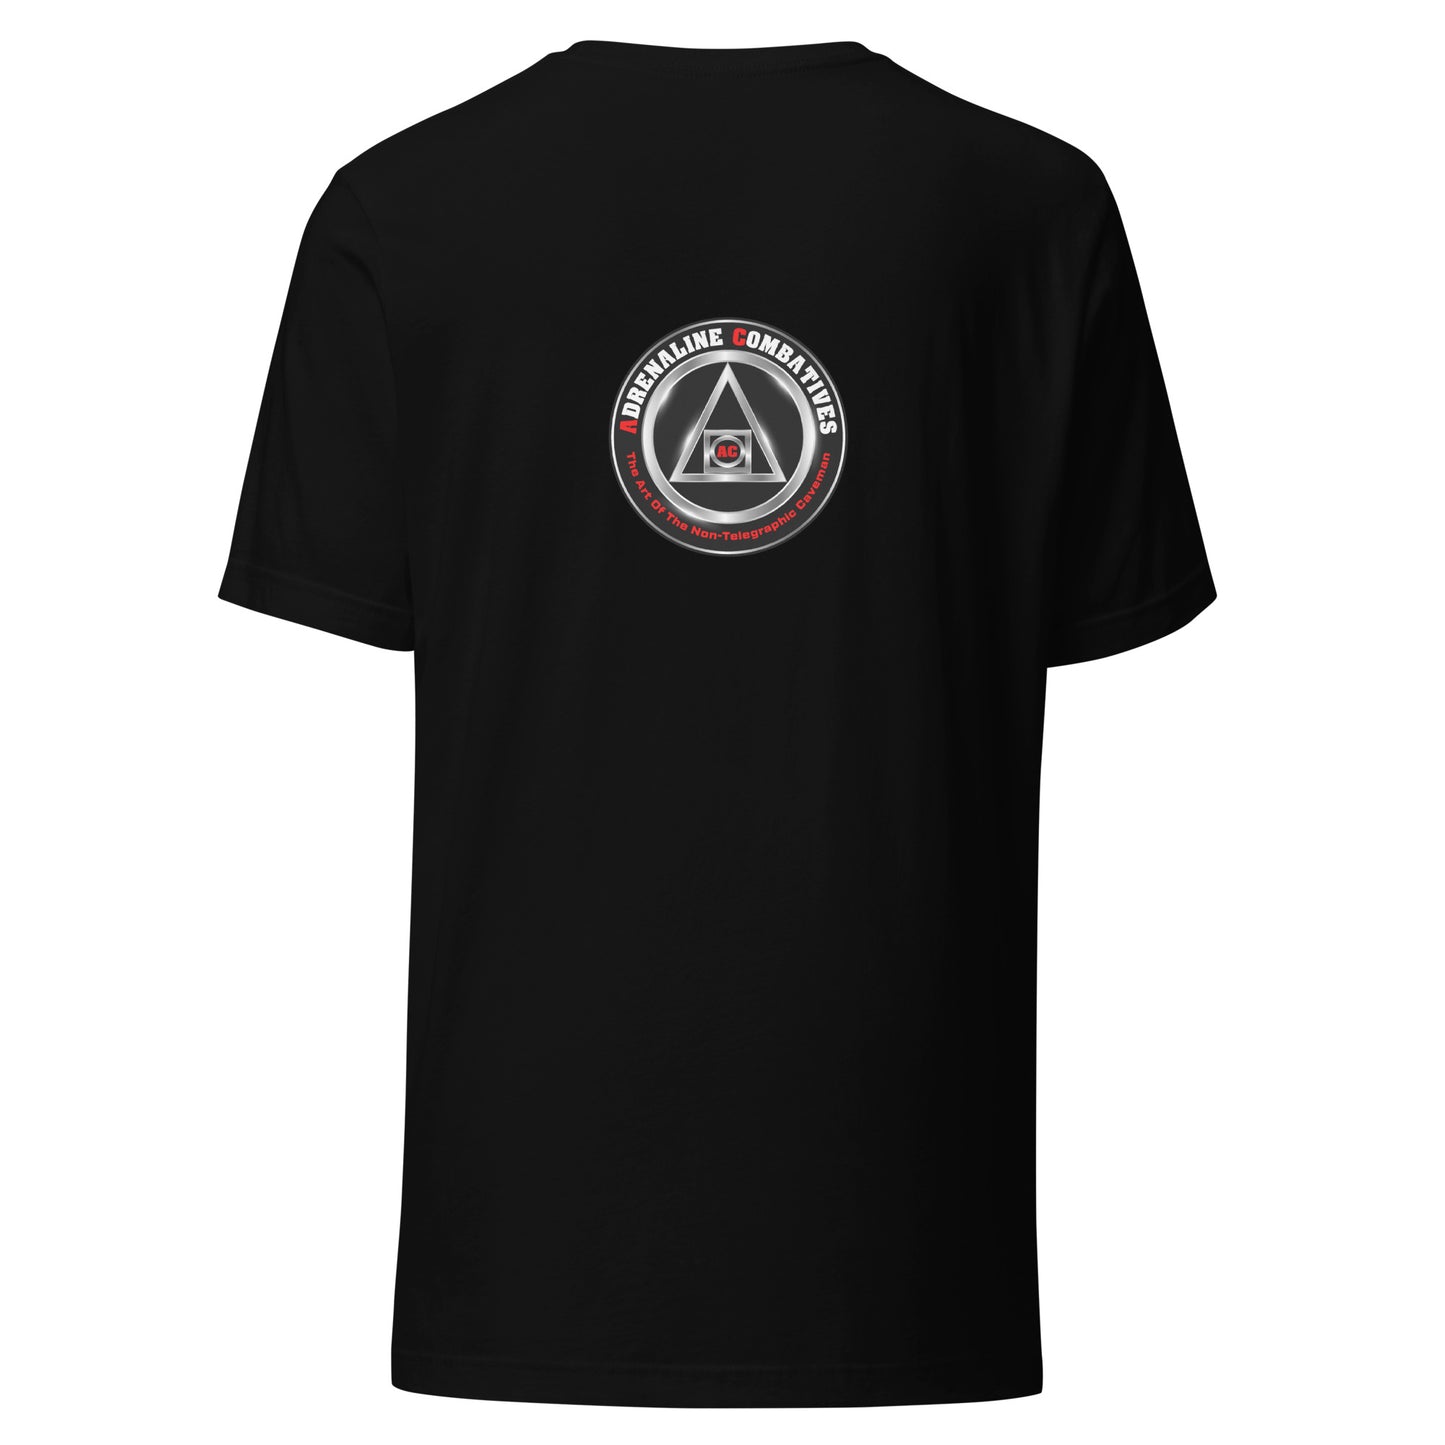 Unisex t-shirt - Adrenaline Combatives - Logo at the back